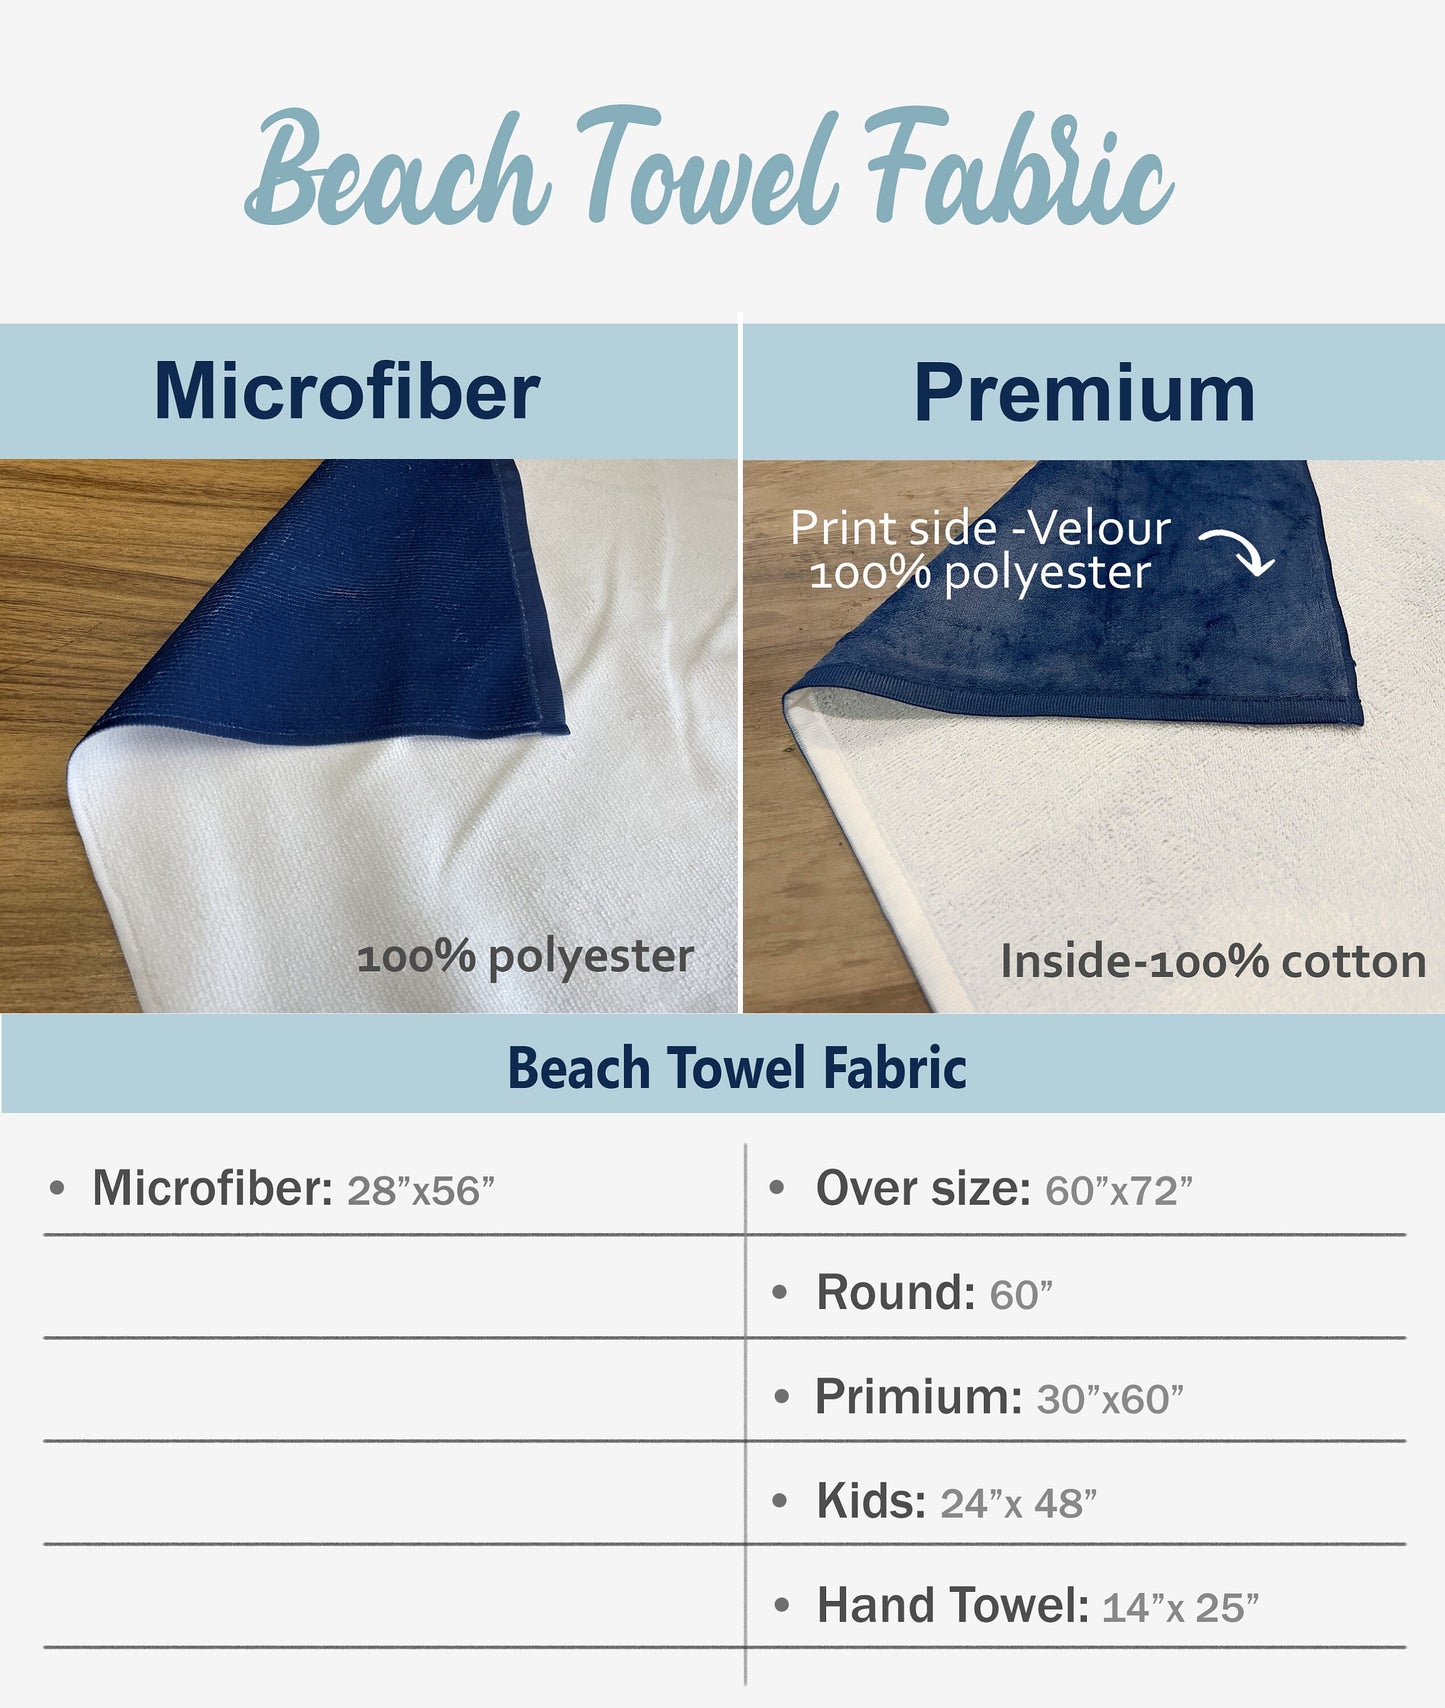 Personalized mermaid beach towel, cute mermaid beach towel, custom marine beach towel, custom beach towel for kids, starfish beach towel